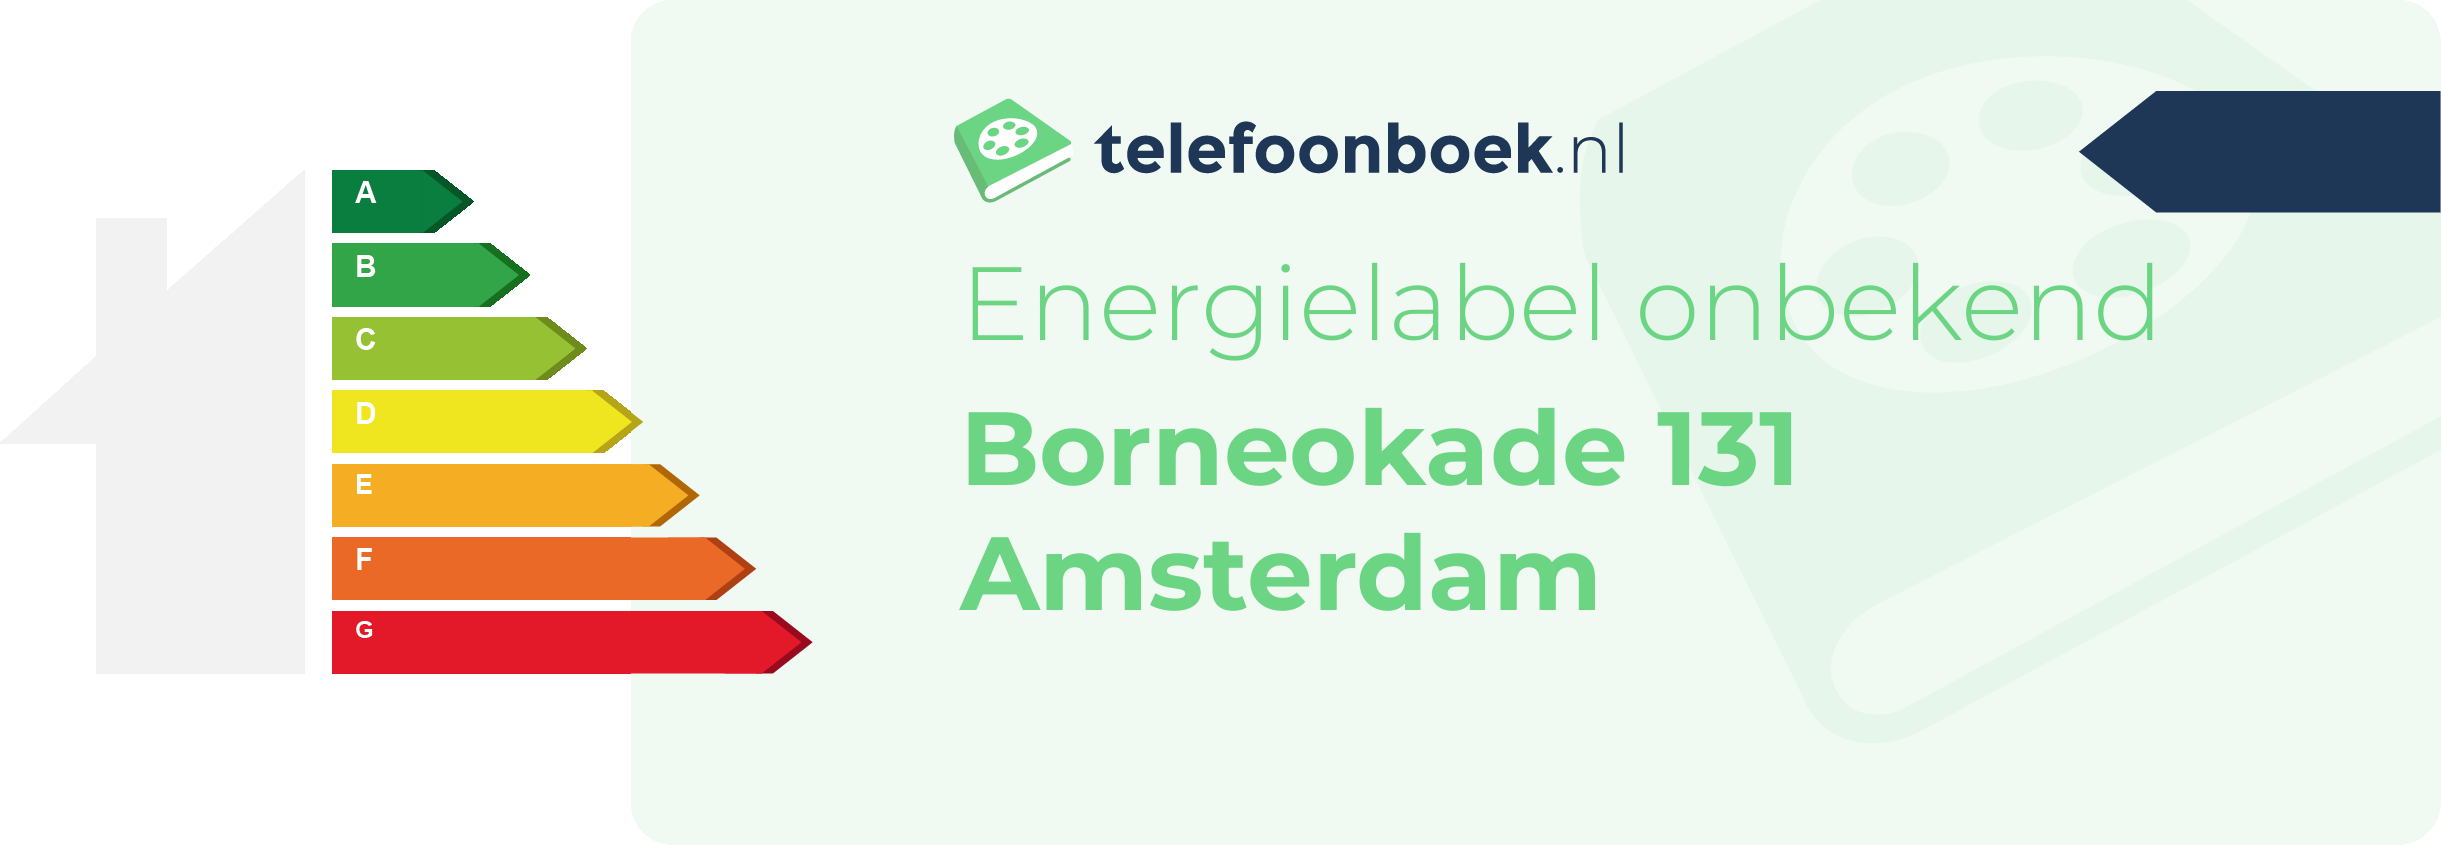 Energielabel Borneokade 131 Amsterdam